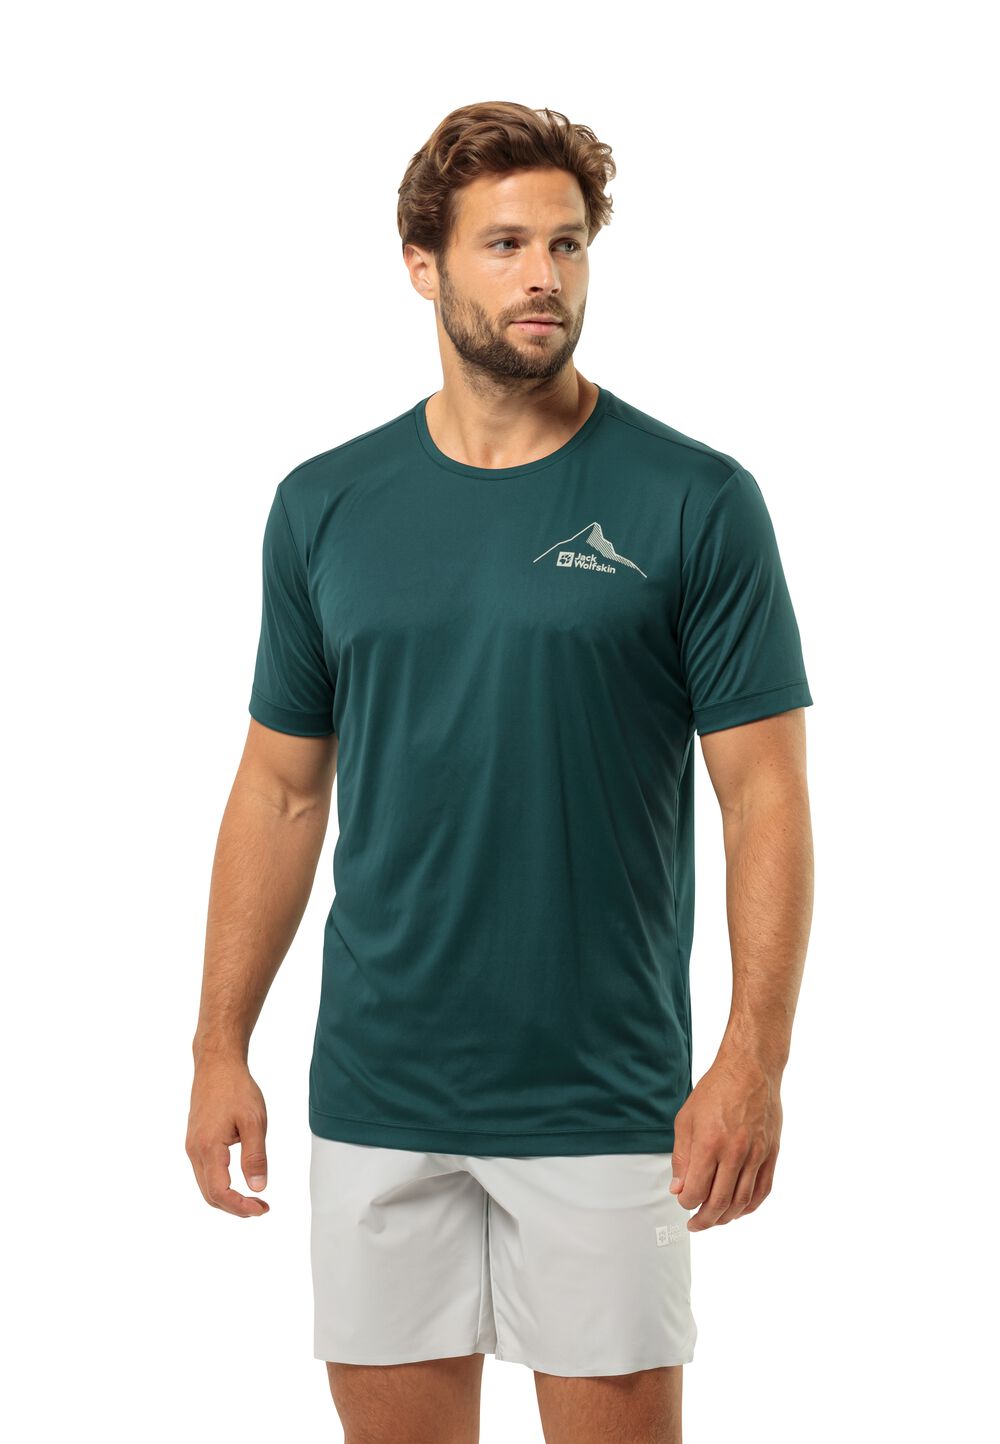 Jack Wolfskin Peak Graphic T-Shirt Men Functioneel shirt Heren XXL emerald